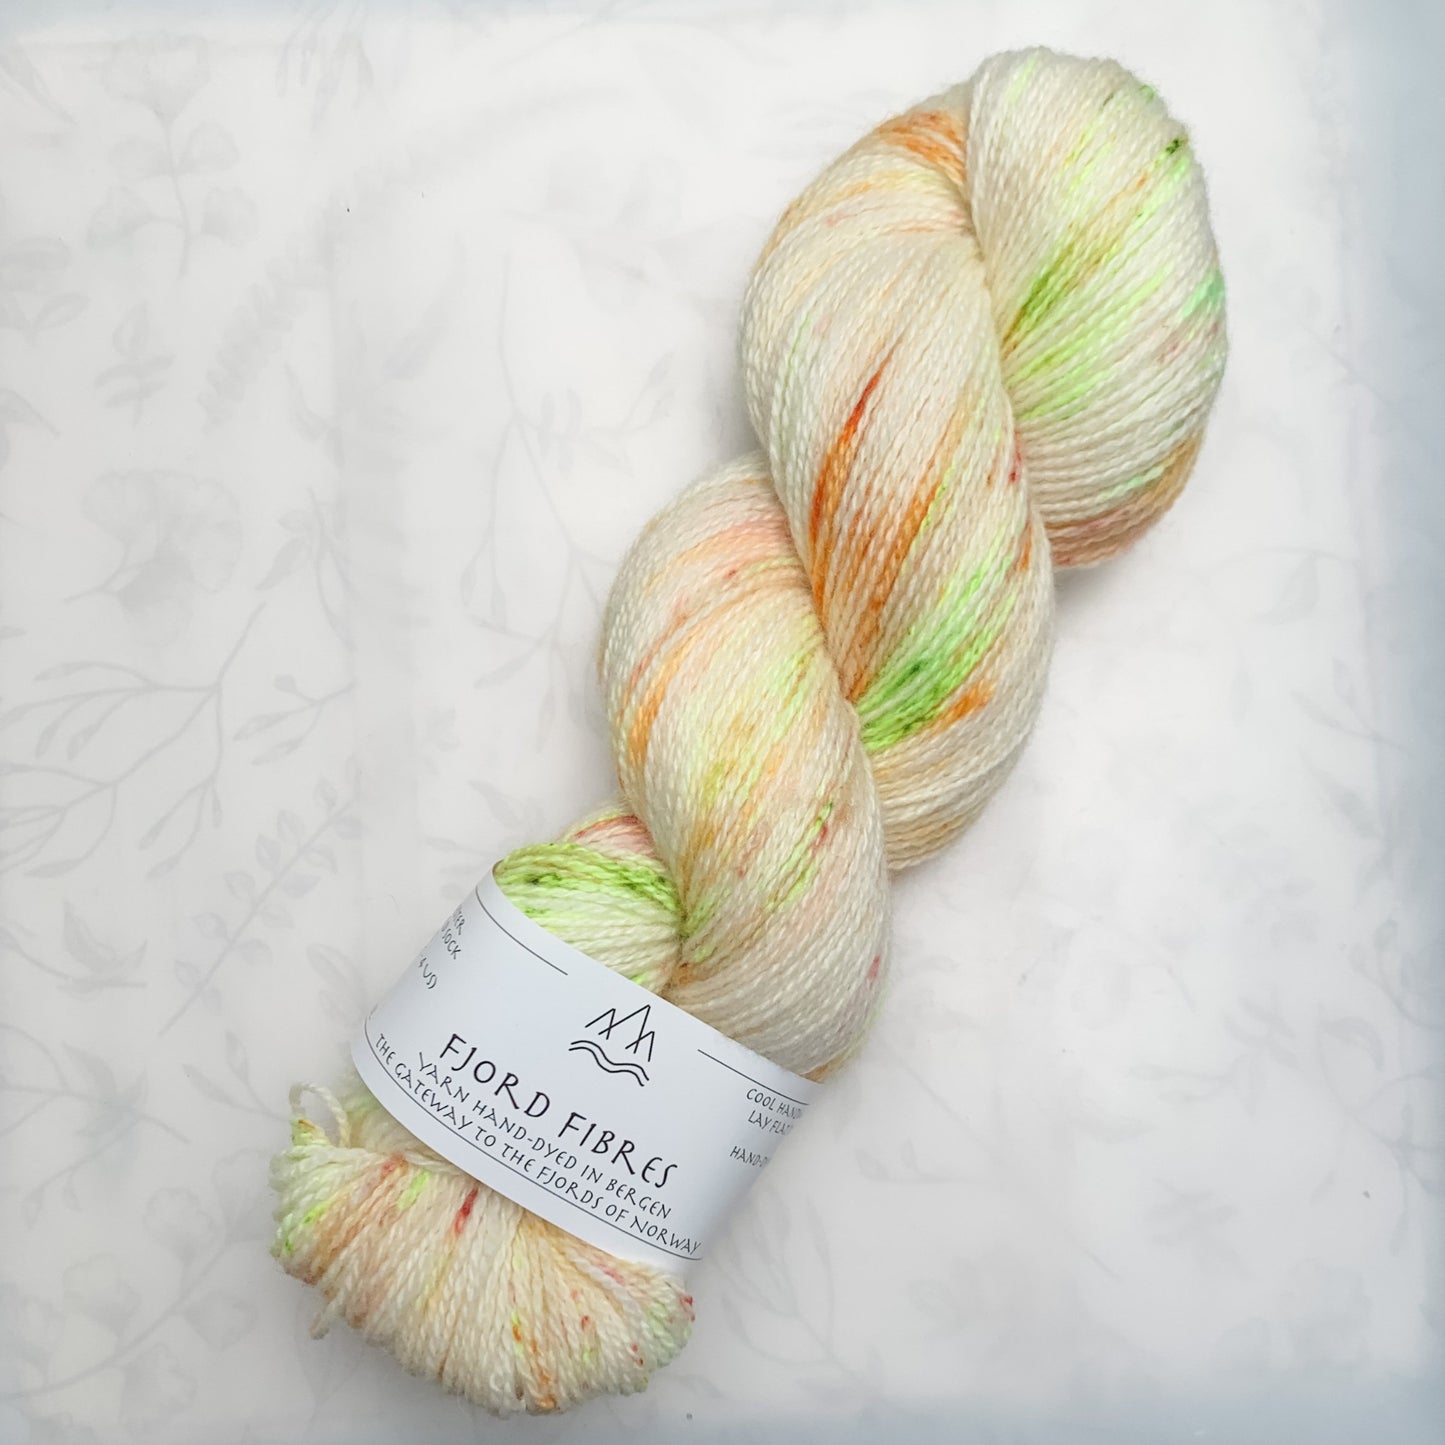 Zingy - Trollfjord sock - Variegated Yarn - Hand dyed yarn